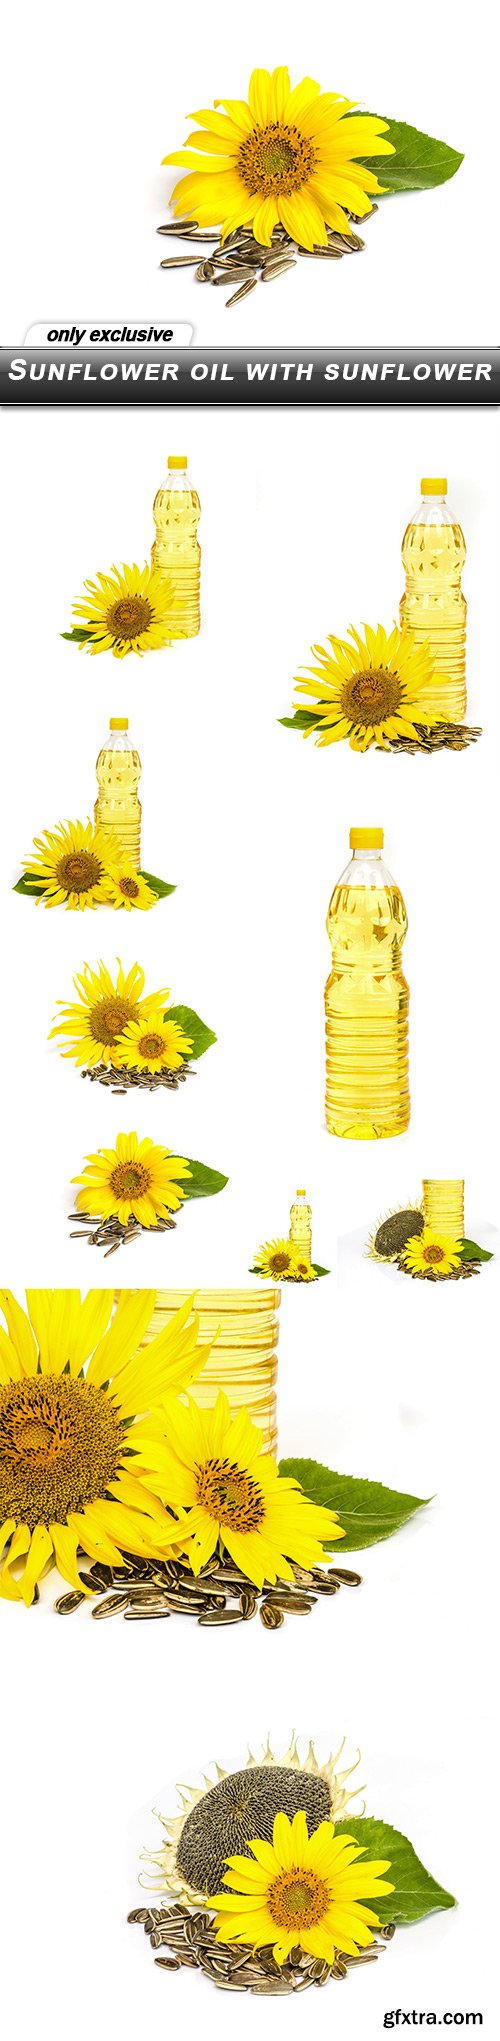 Sunflower oil with sunflower - 10 UHQ JPEG